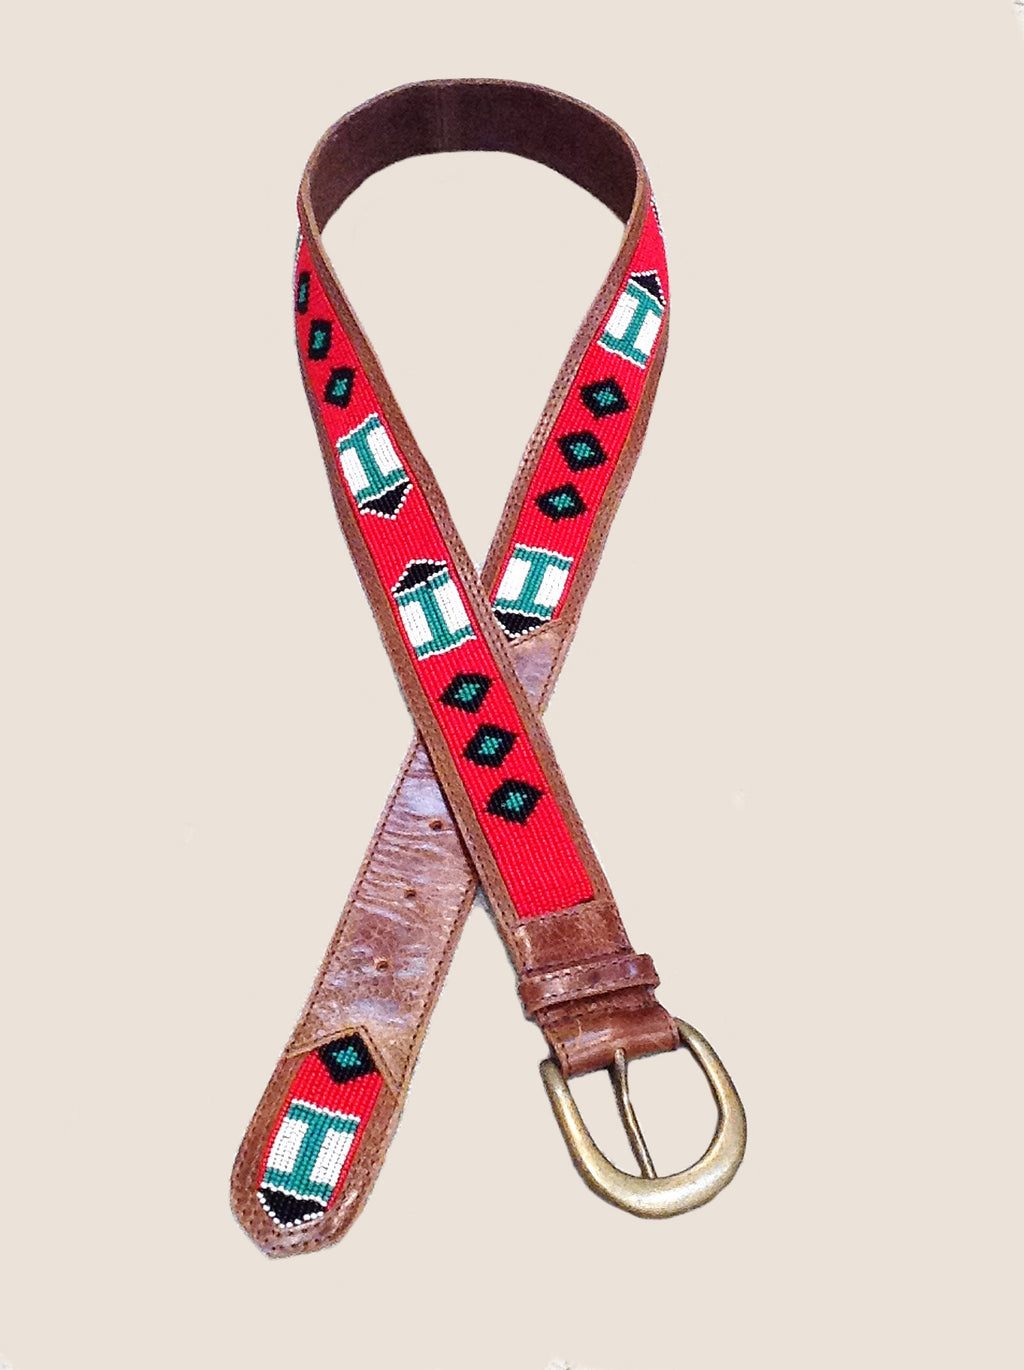 Embellished Leather Belt-Brown, Red & Turq